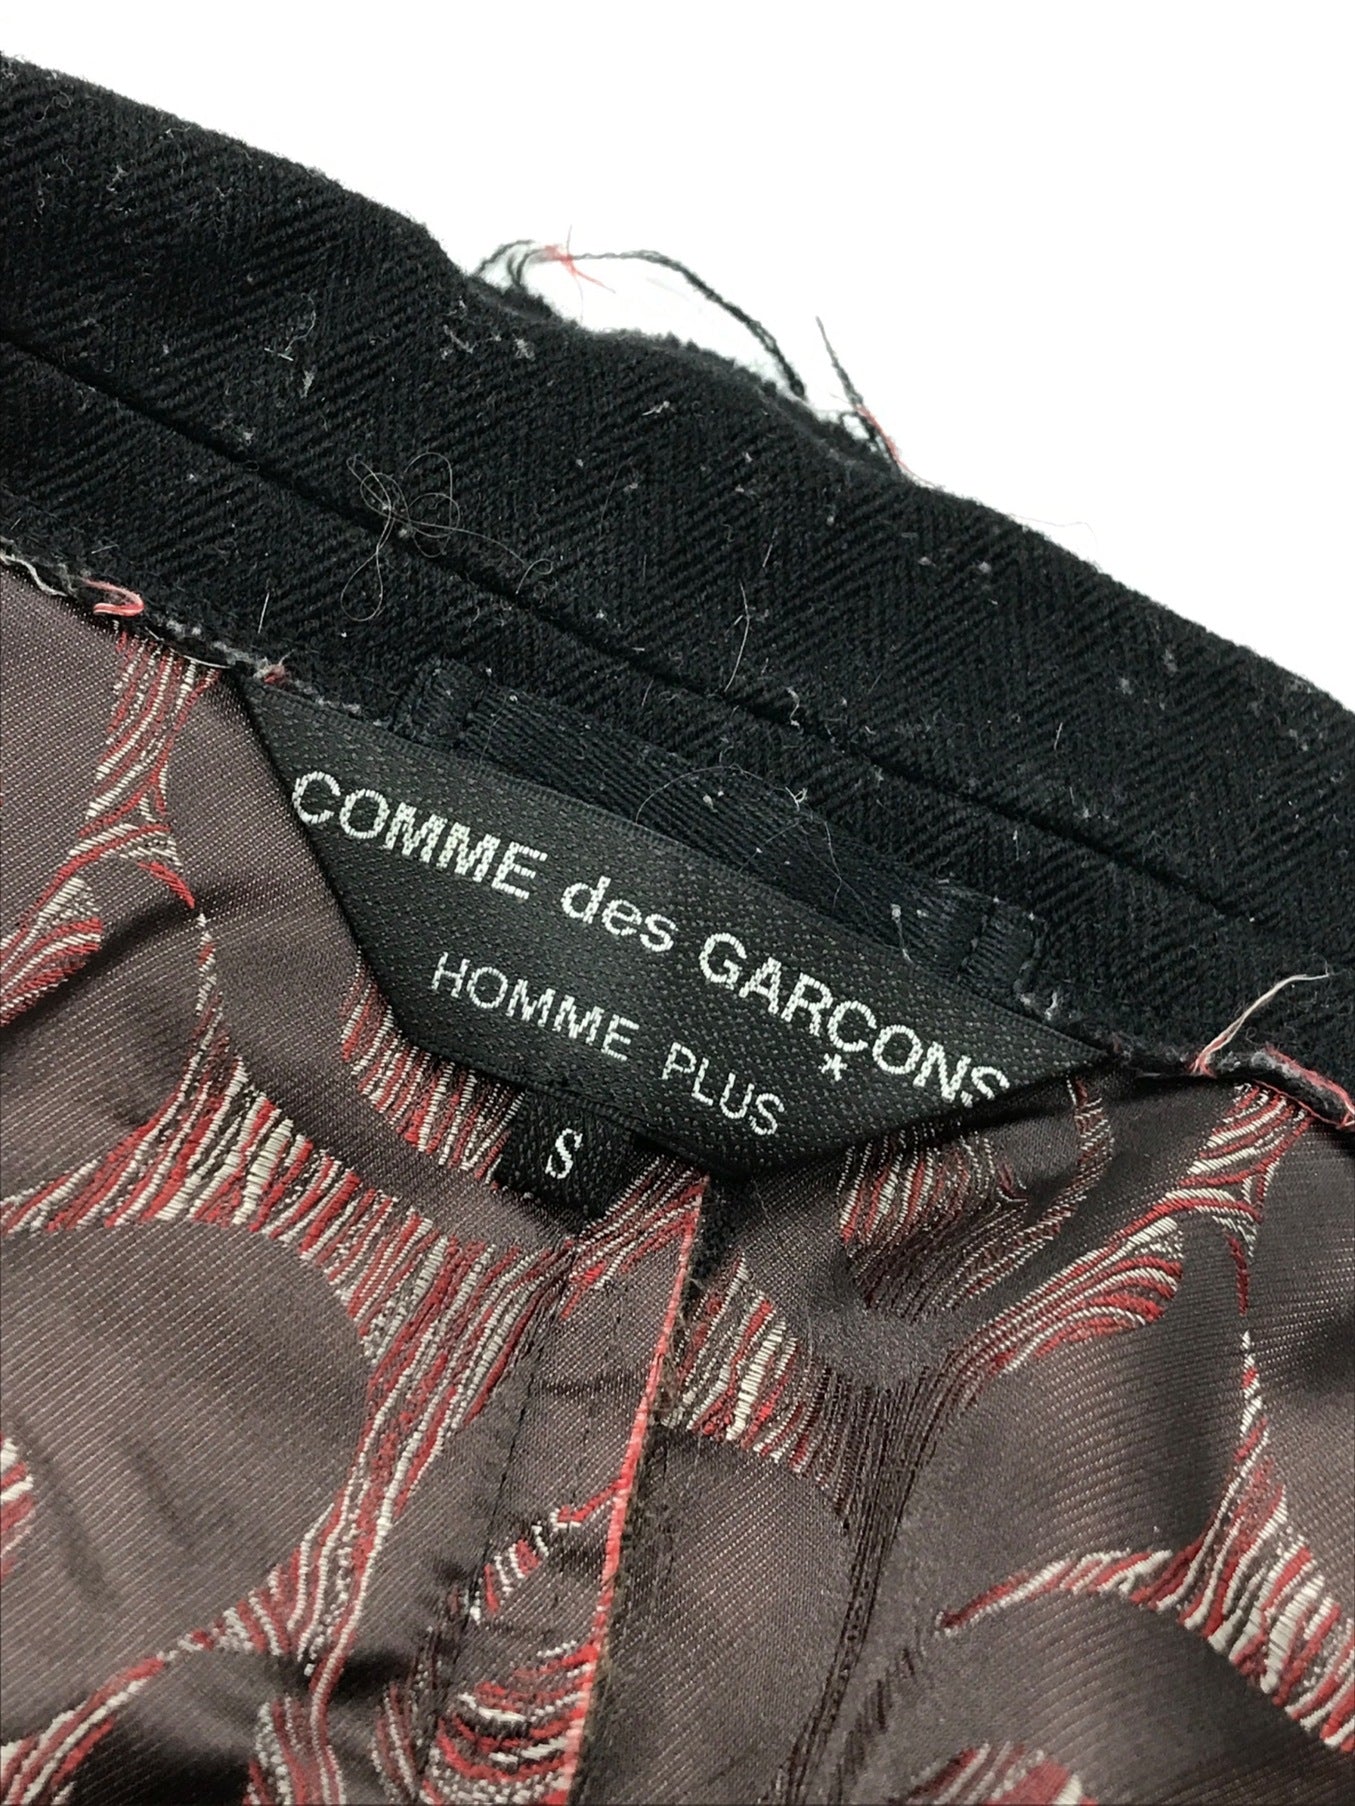 Pre-owned] COMME des GARCONS HOMME PLUS wool jacket pg-j023